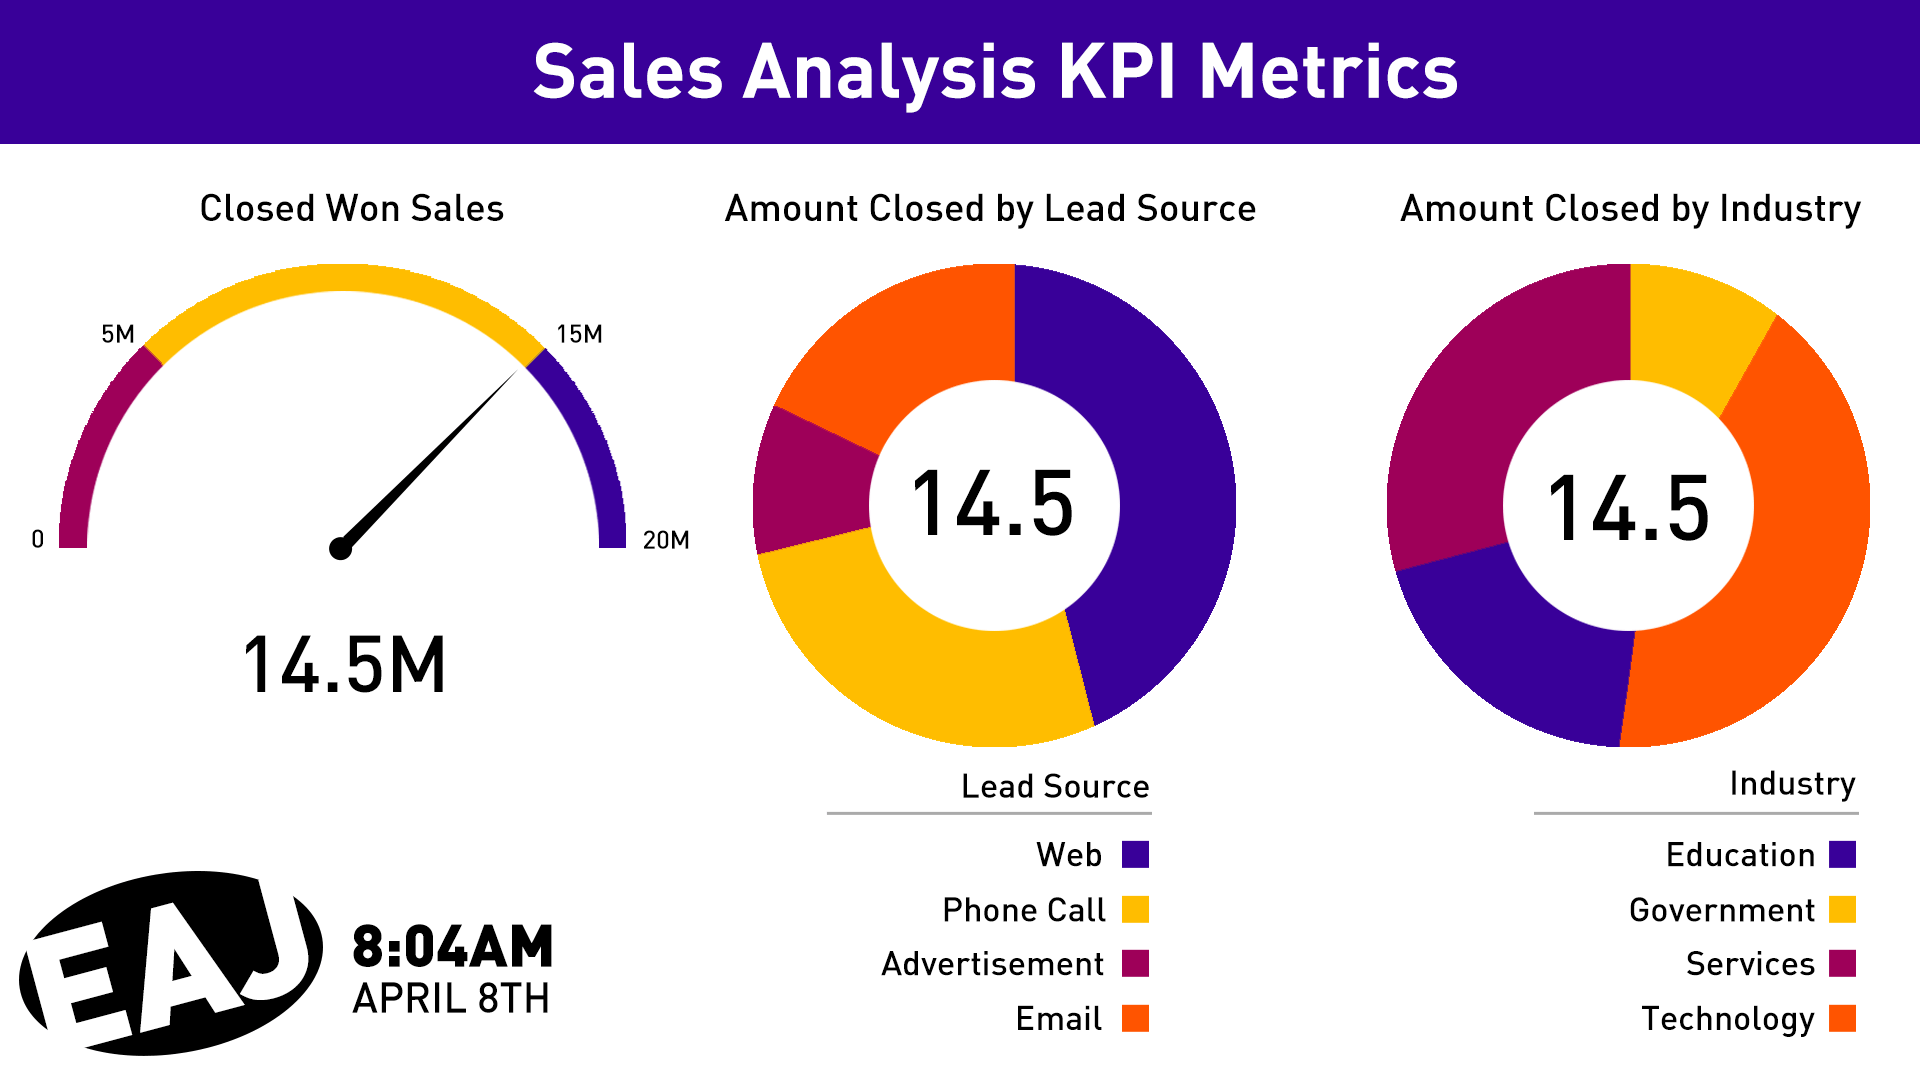 White and purple corporate digital signage featuring important sales KPI metrics